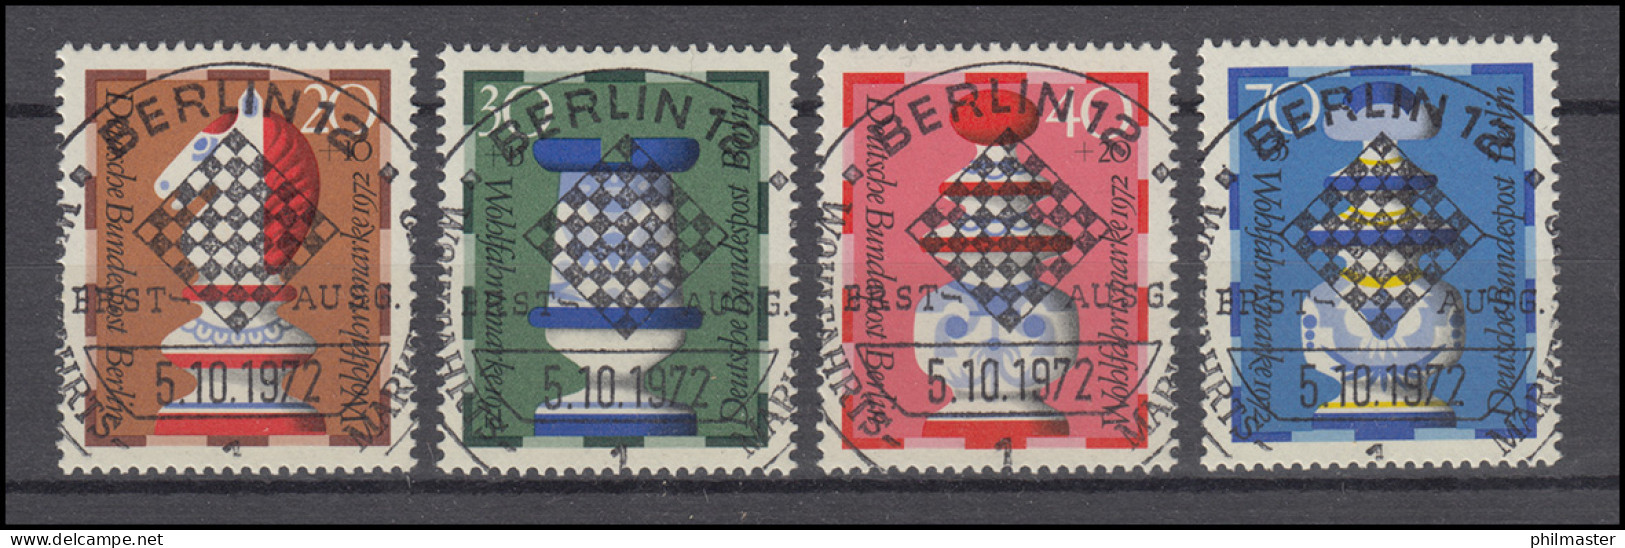 435-438 Wofa Schachfiguren 1972 - Satz Mit Vollstempel ESSt BERLIN 5.10.72 - Gebraucht